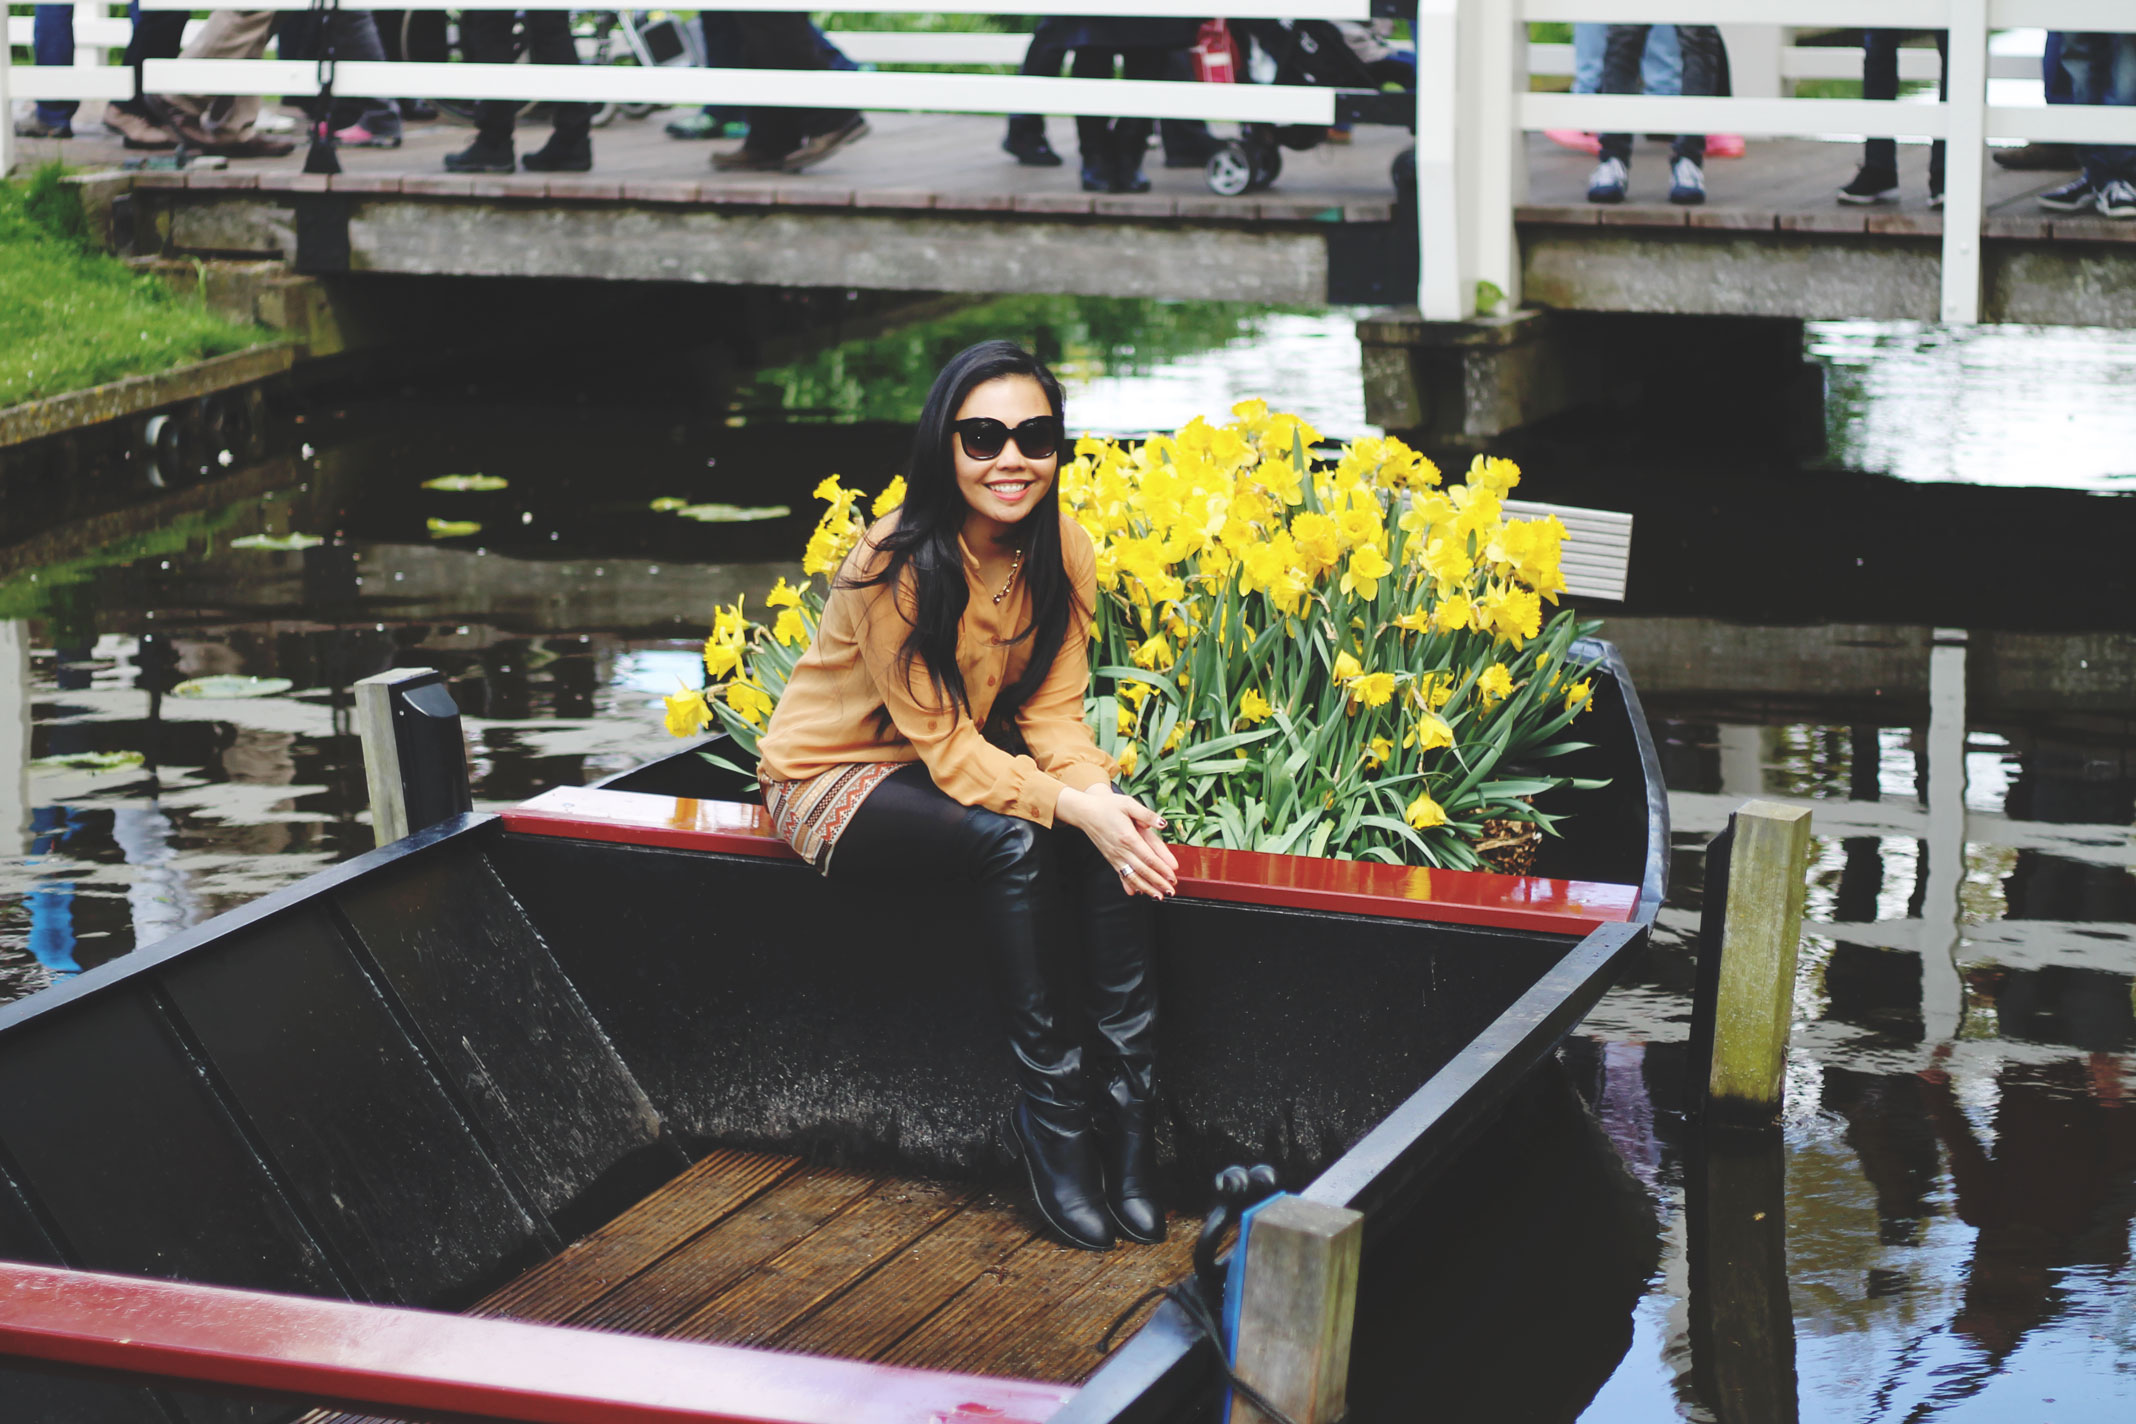 STYLEAT30 Travel + Fashion Blog - Keukenhof Gardens and Tulip Fields Tour from Amsterdam - Holland Tulips - 24